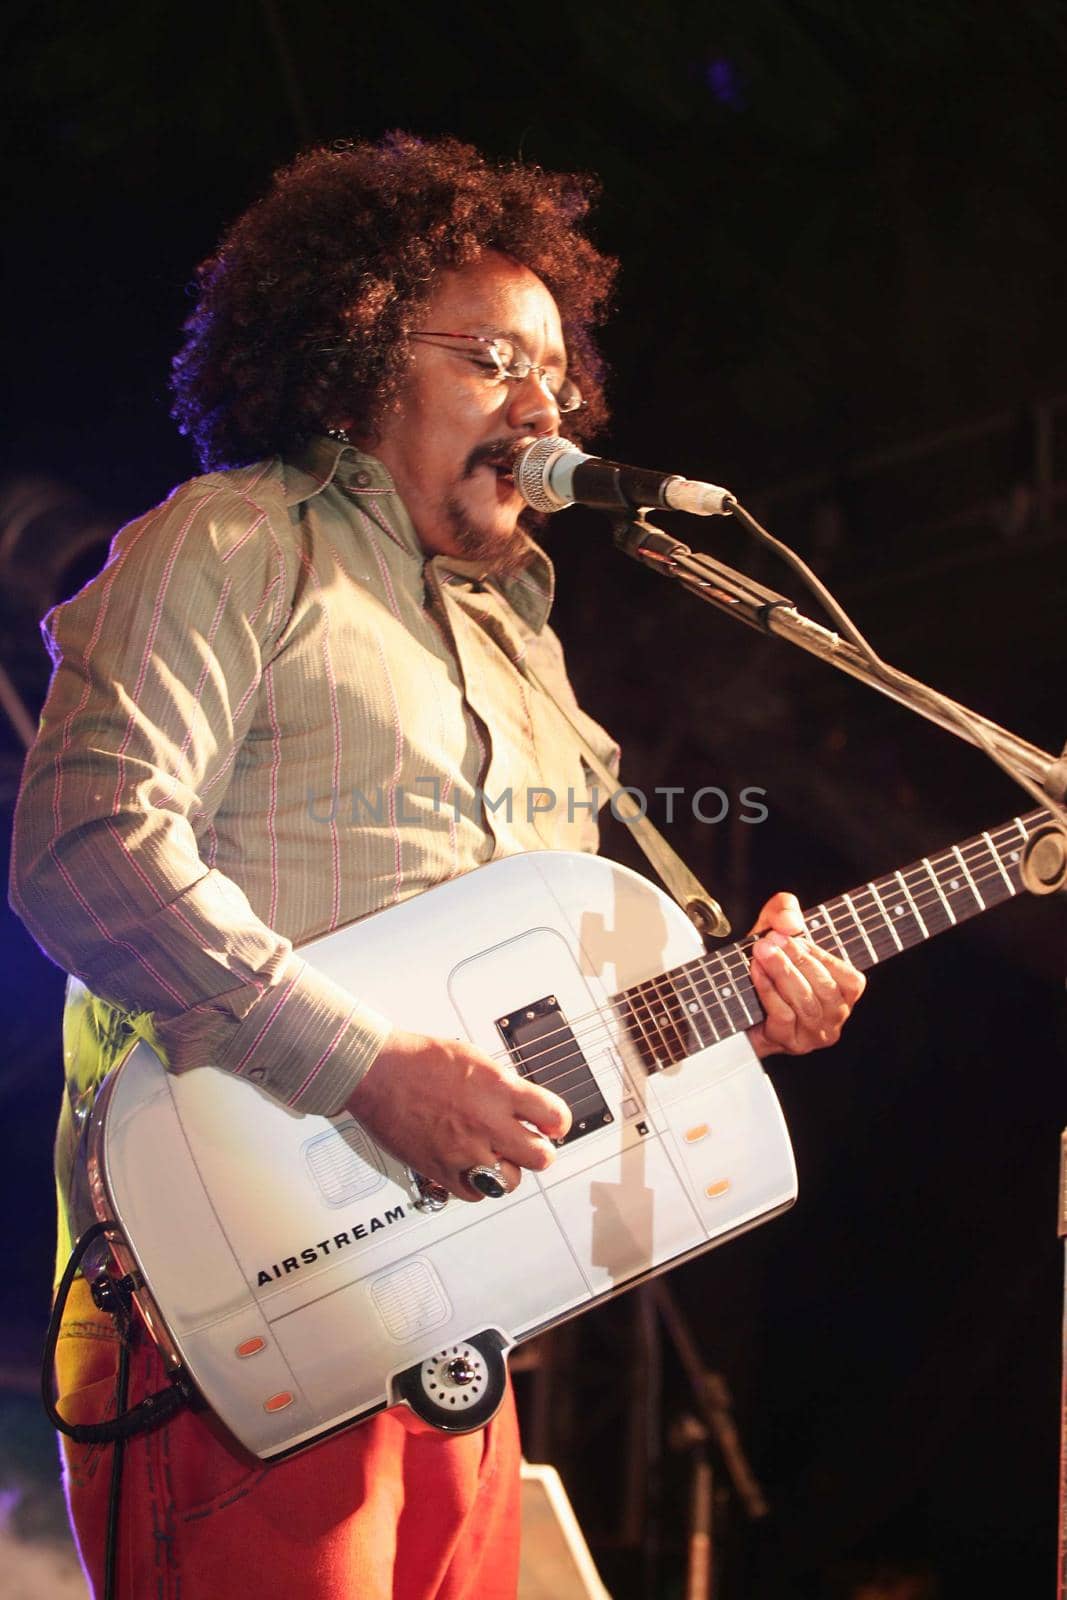 porto seguro, bahia, brazil - november 21, 2009: Singer and songwriter Chico Cesar during a show in the city of Porto Seguro.